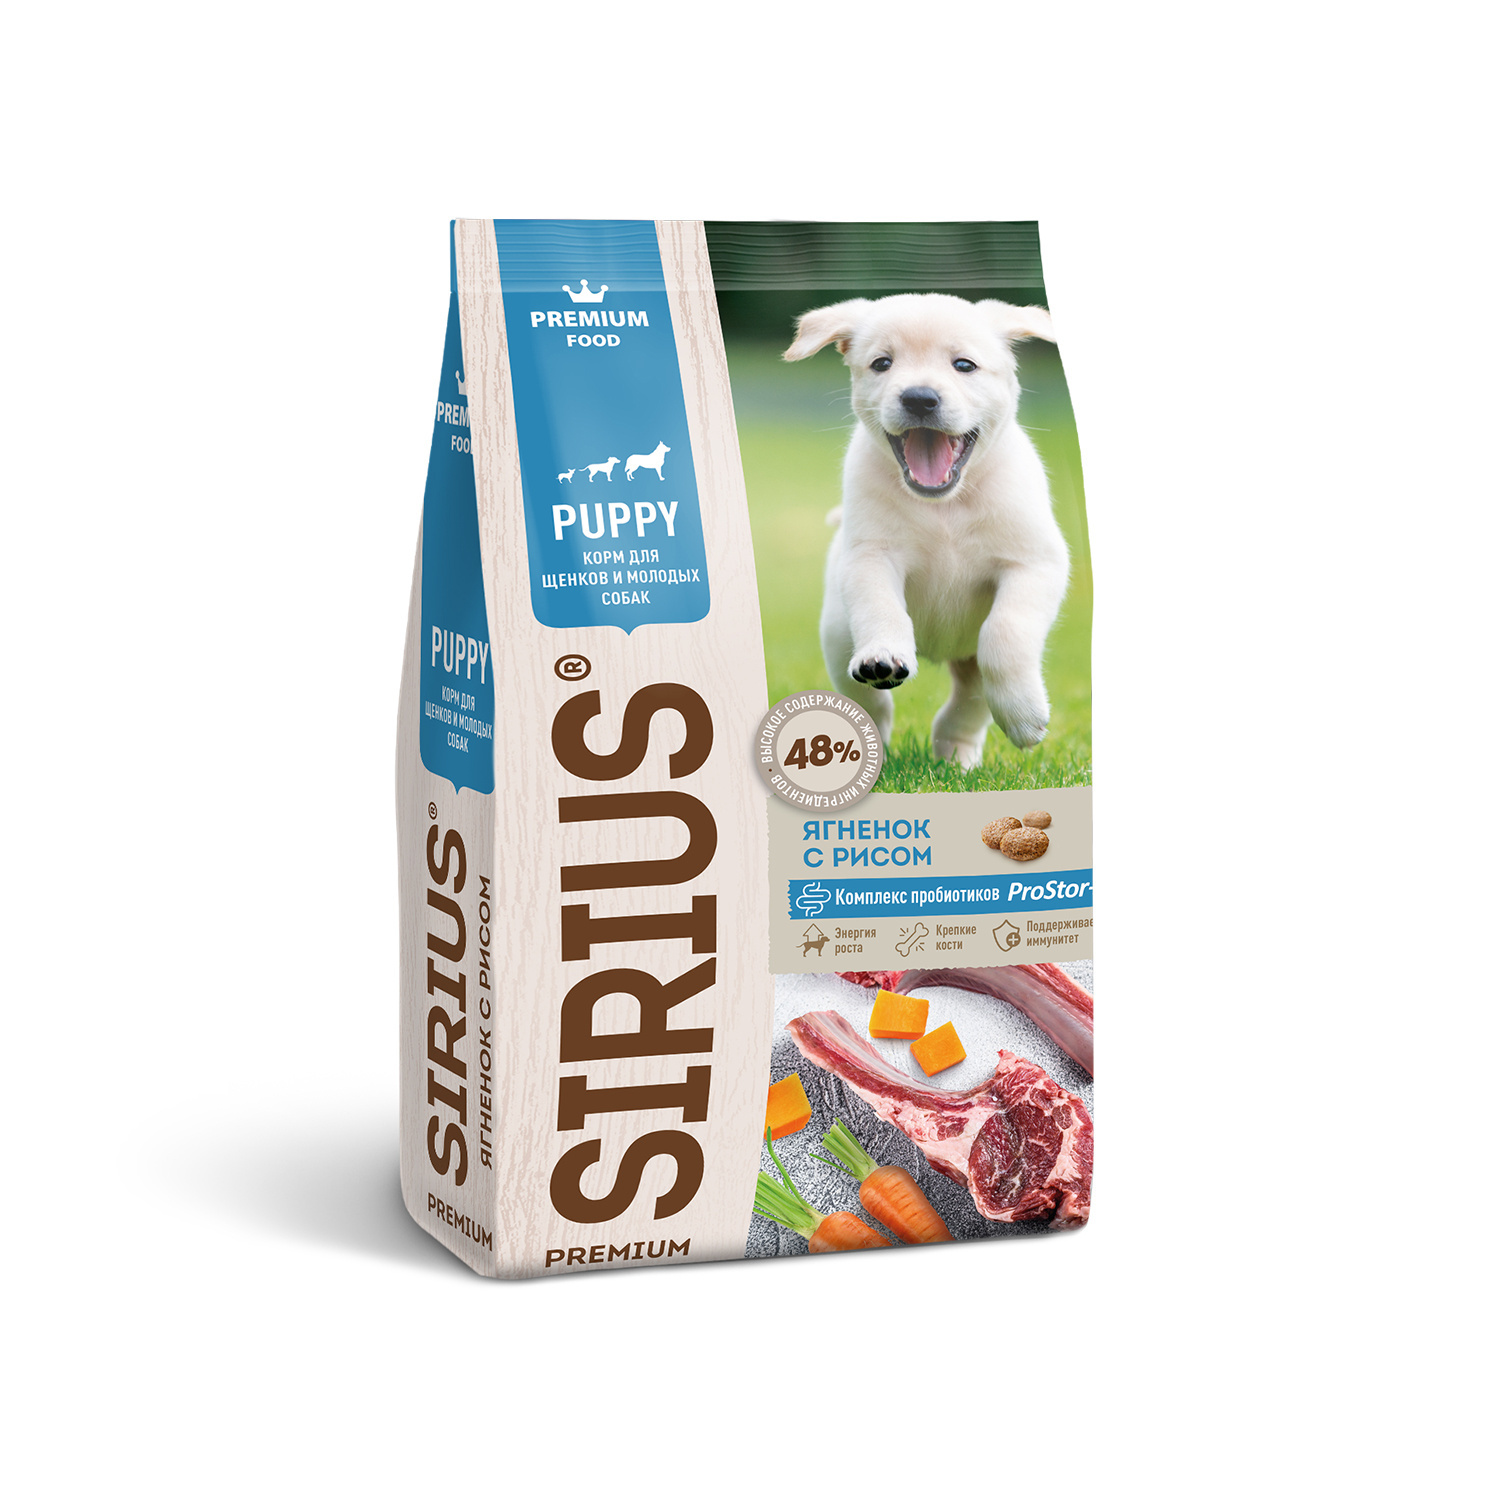 Sirius Sirius сухой корм для щенков и молодых собак, ягненок с рисом (15 кг) sirius sirius сухой корм для щенков и молодых собак ягненок с рисом 15 кг